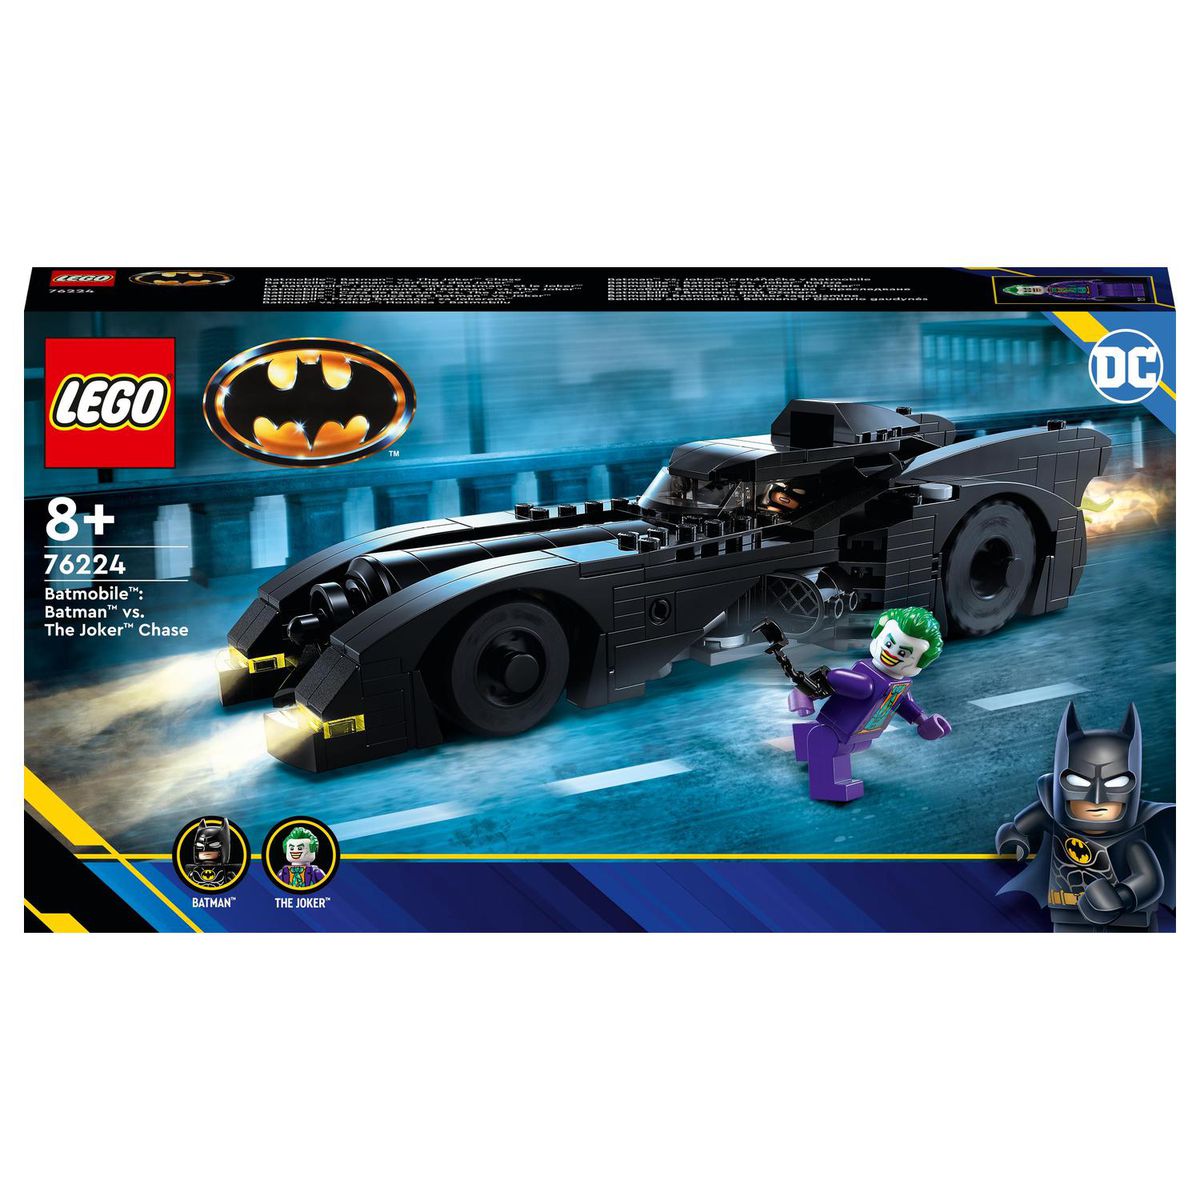 LEGO 76224 Batman 1989 Batmobile Batman vs. The Joker Chase